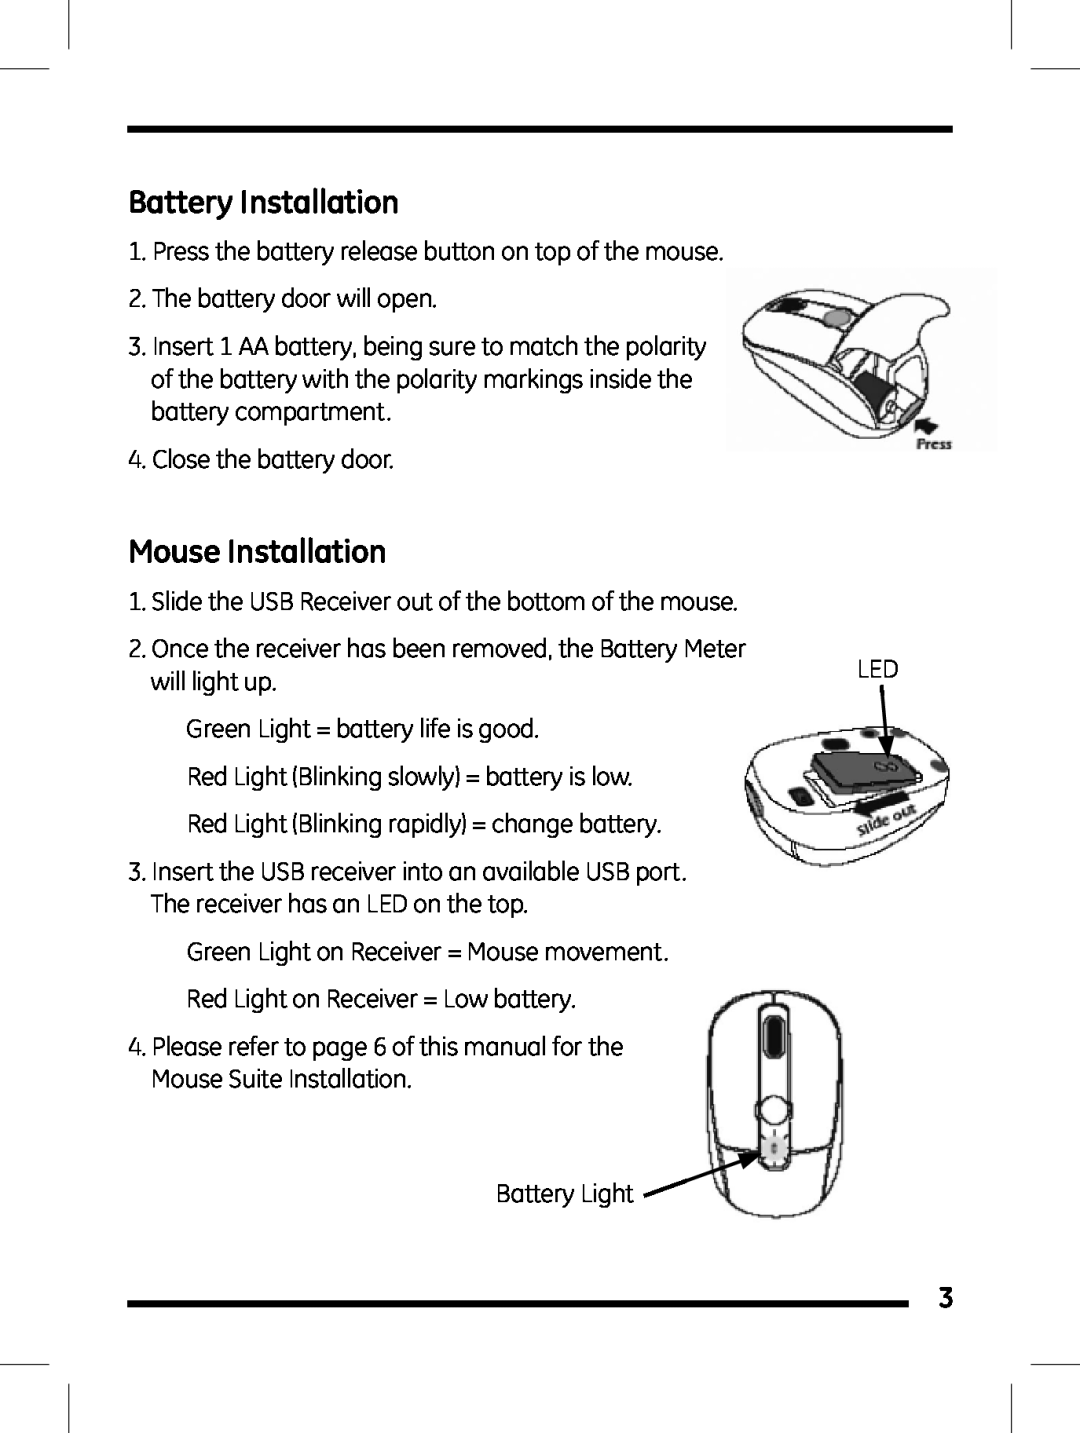 Jasco 98505 instruction manual Battery Installation, Mouse Installation 